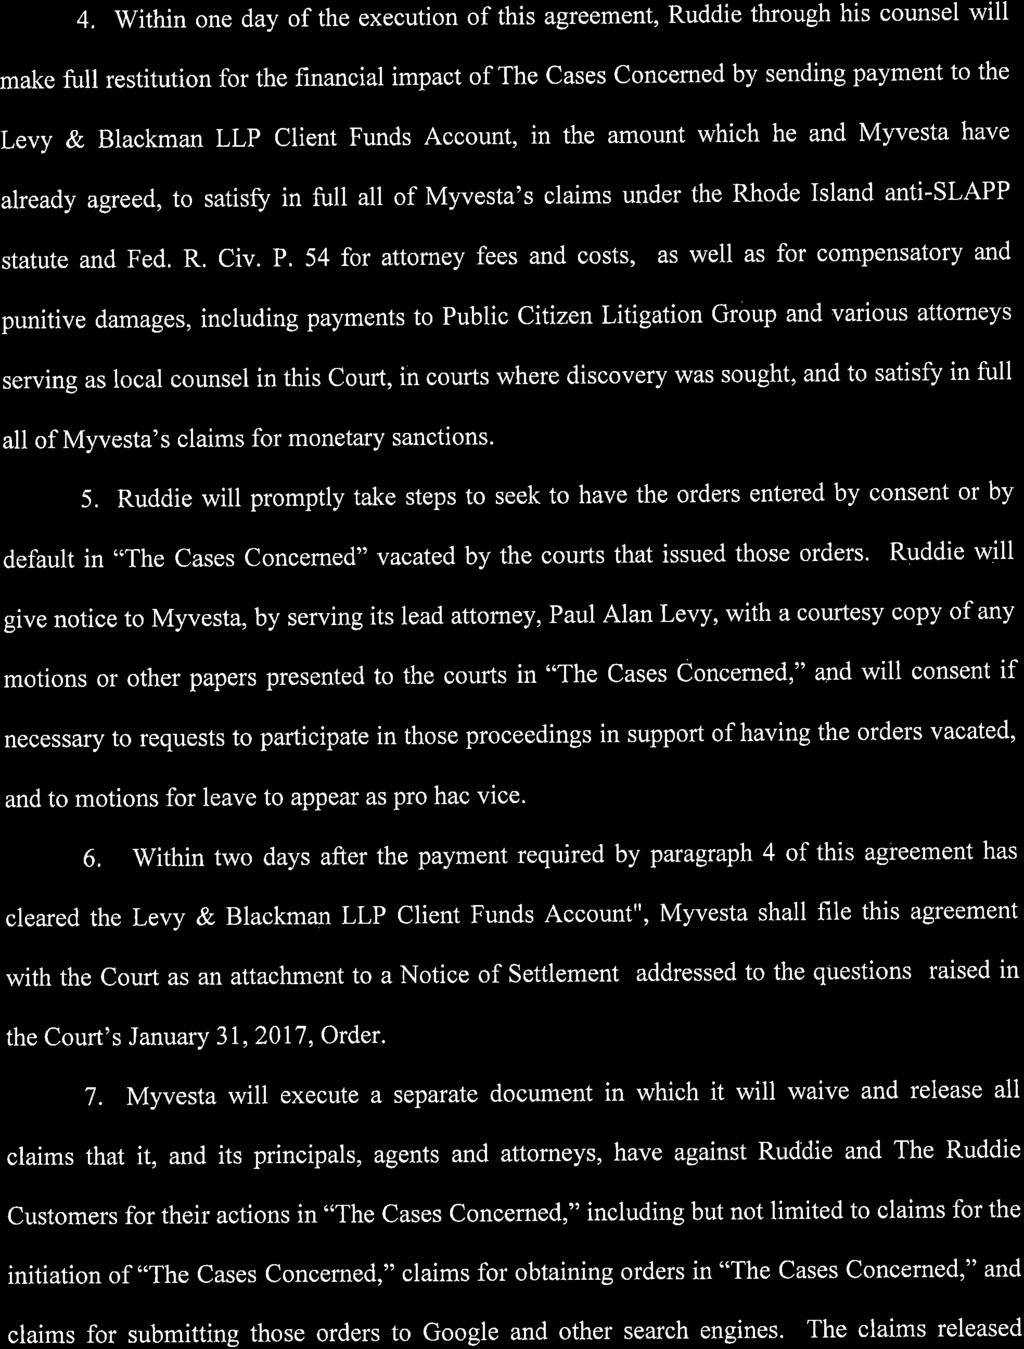 Case 1:16-cv-00144-S-LDA Document 15-2